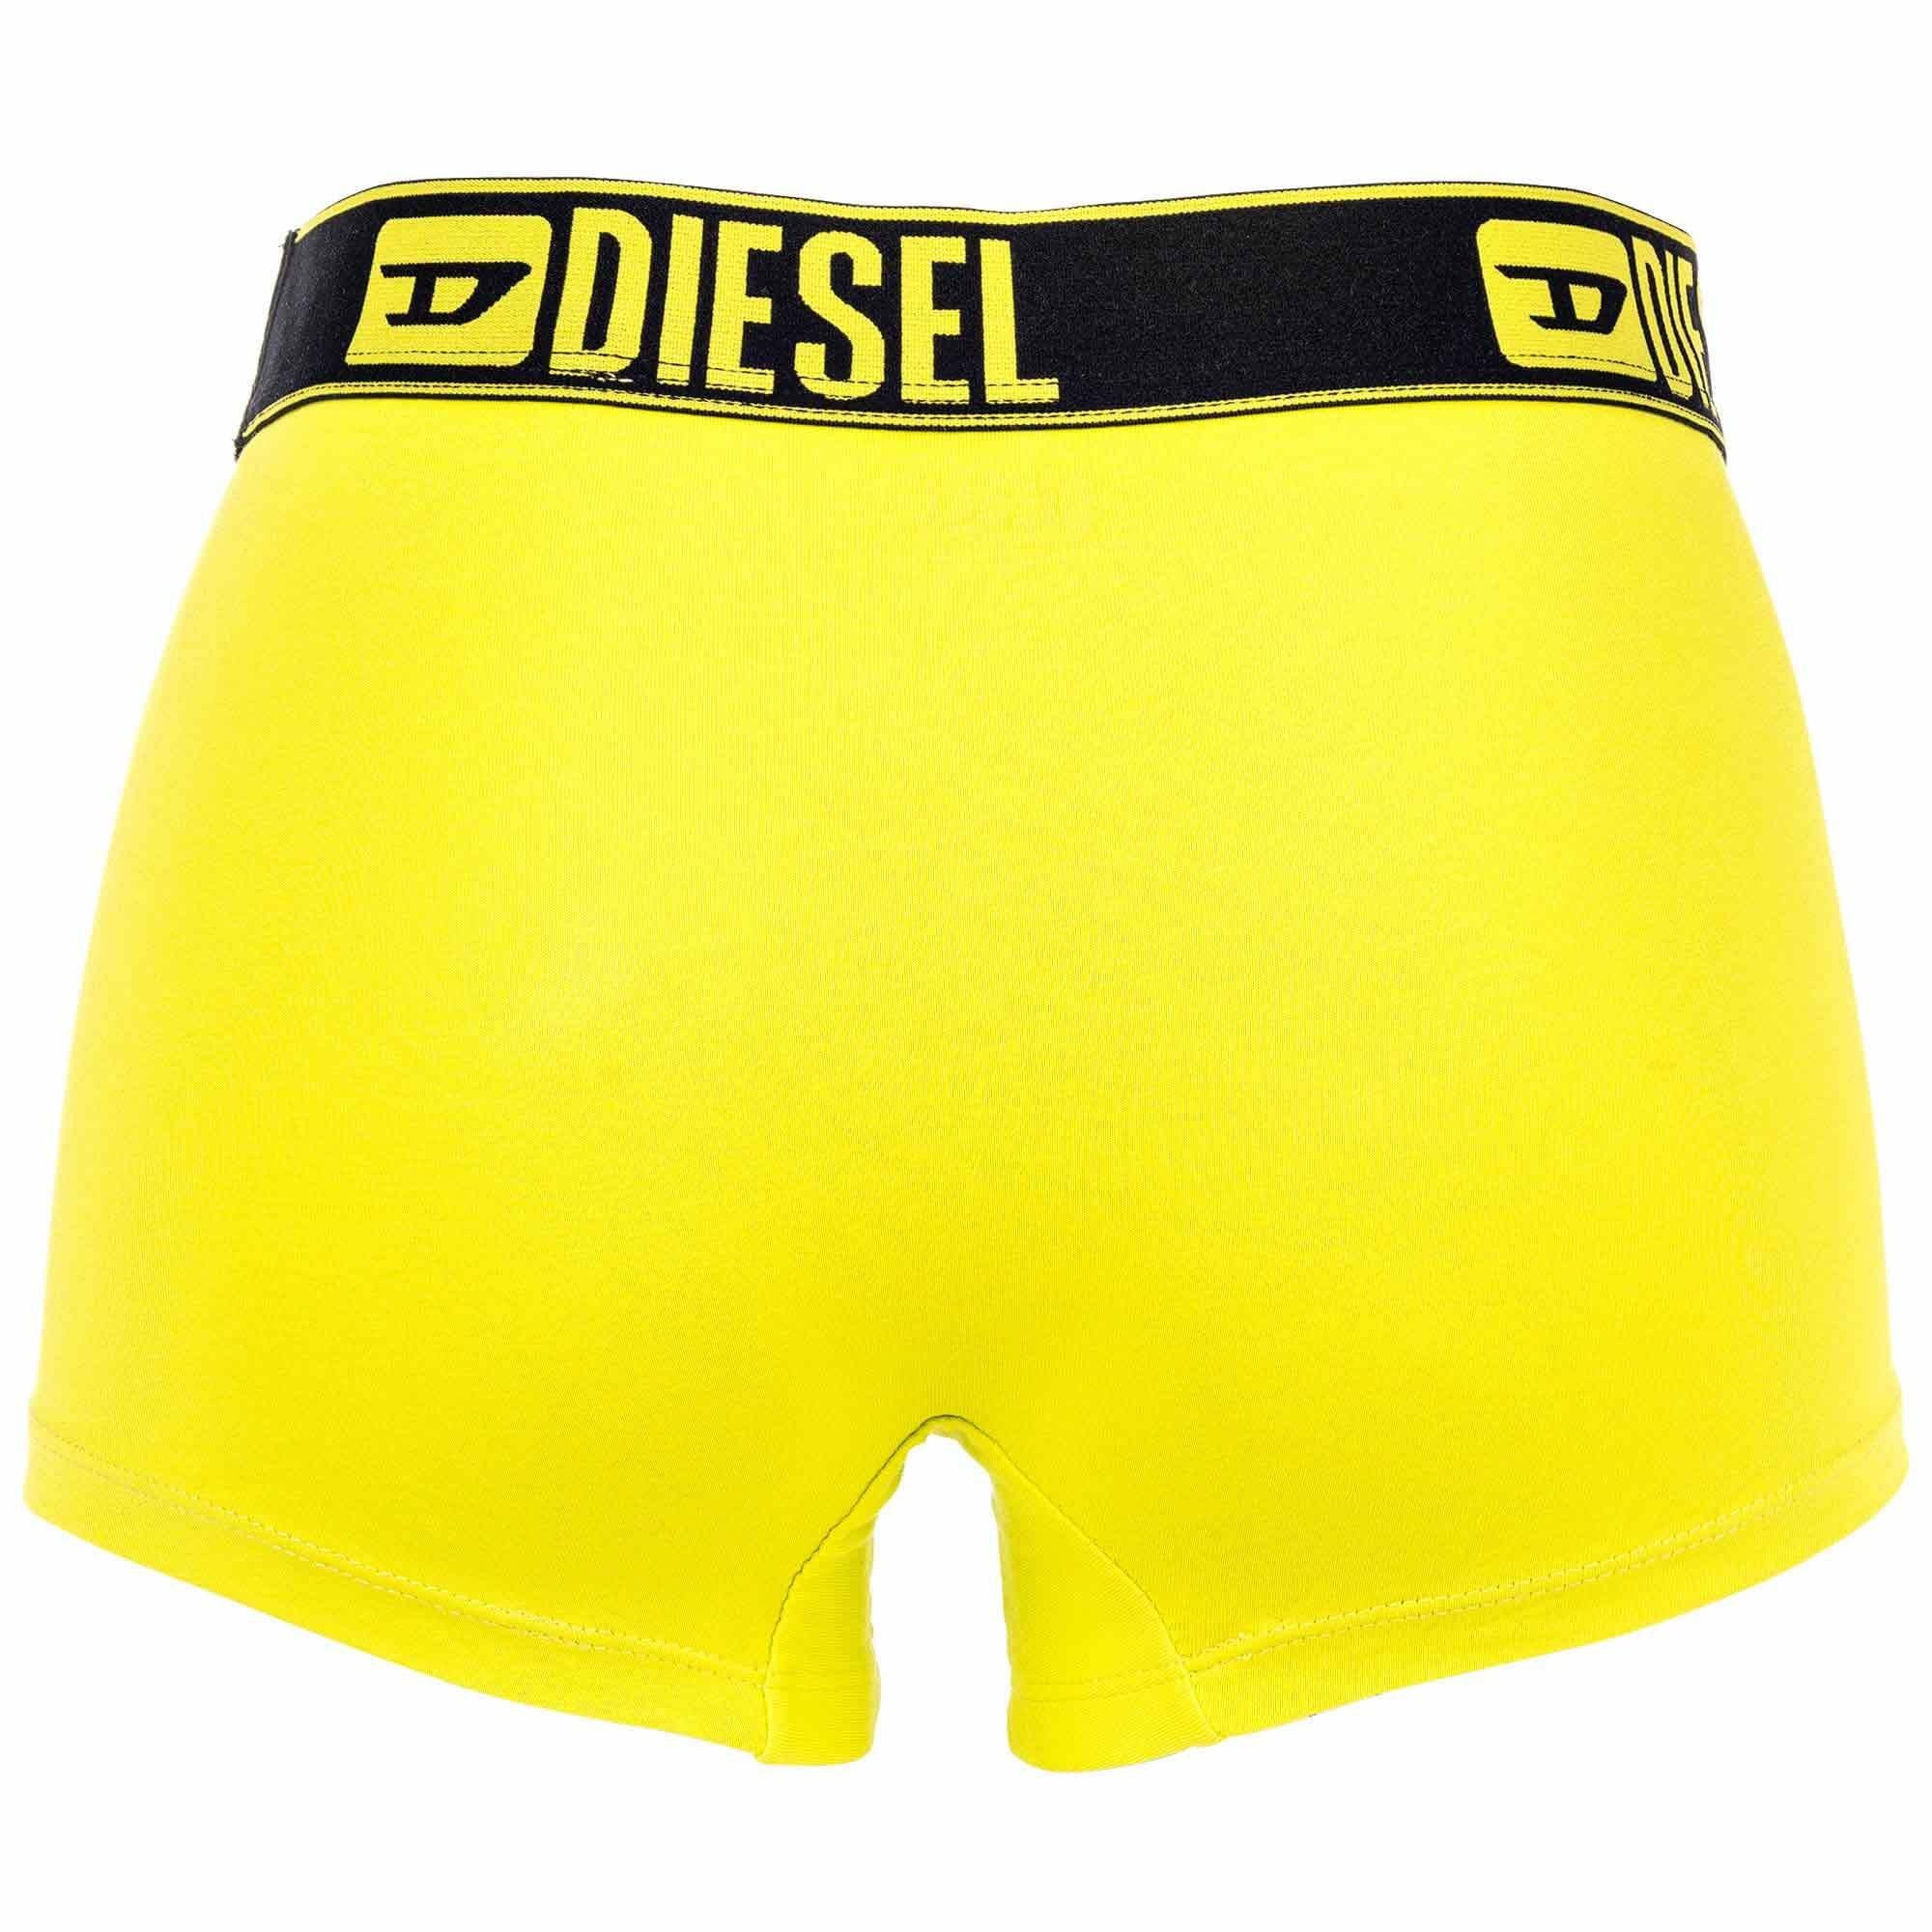 Diesel Boxer Pack Herren 3er Boxershorts, Türkis/Gelb/Schwarz -